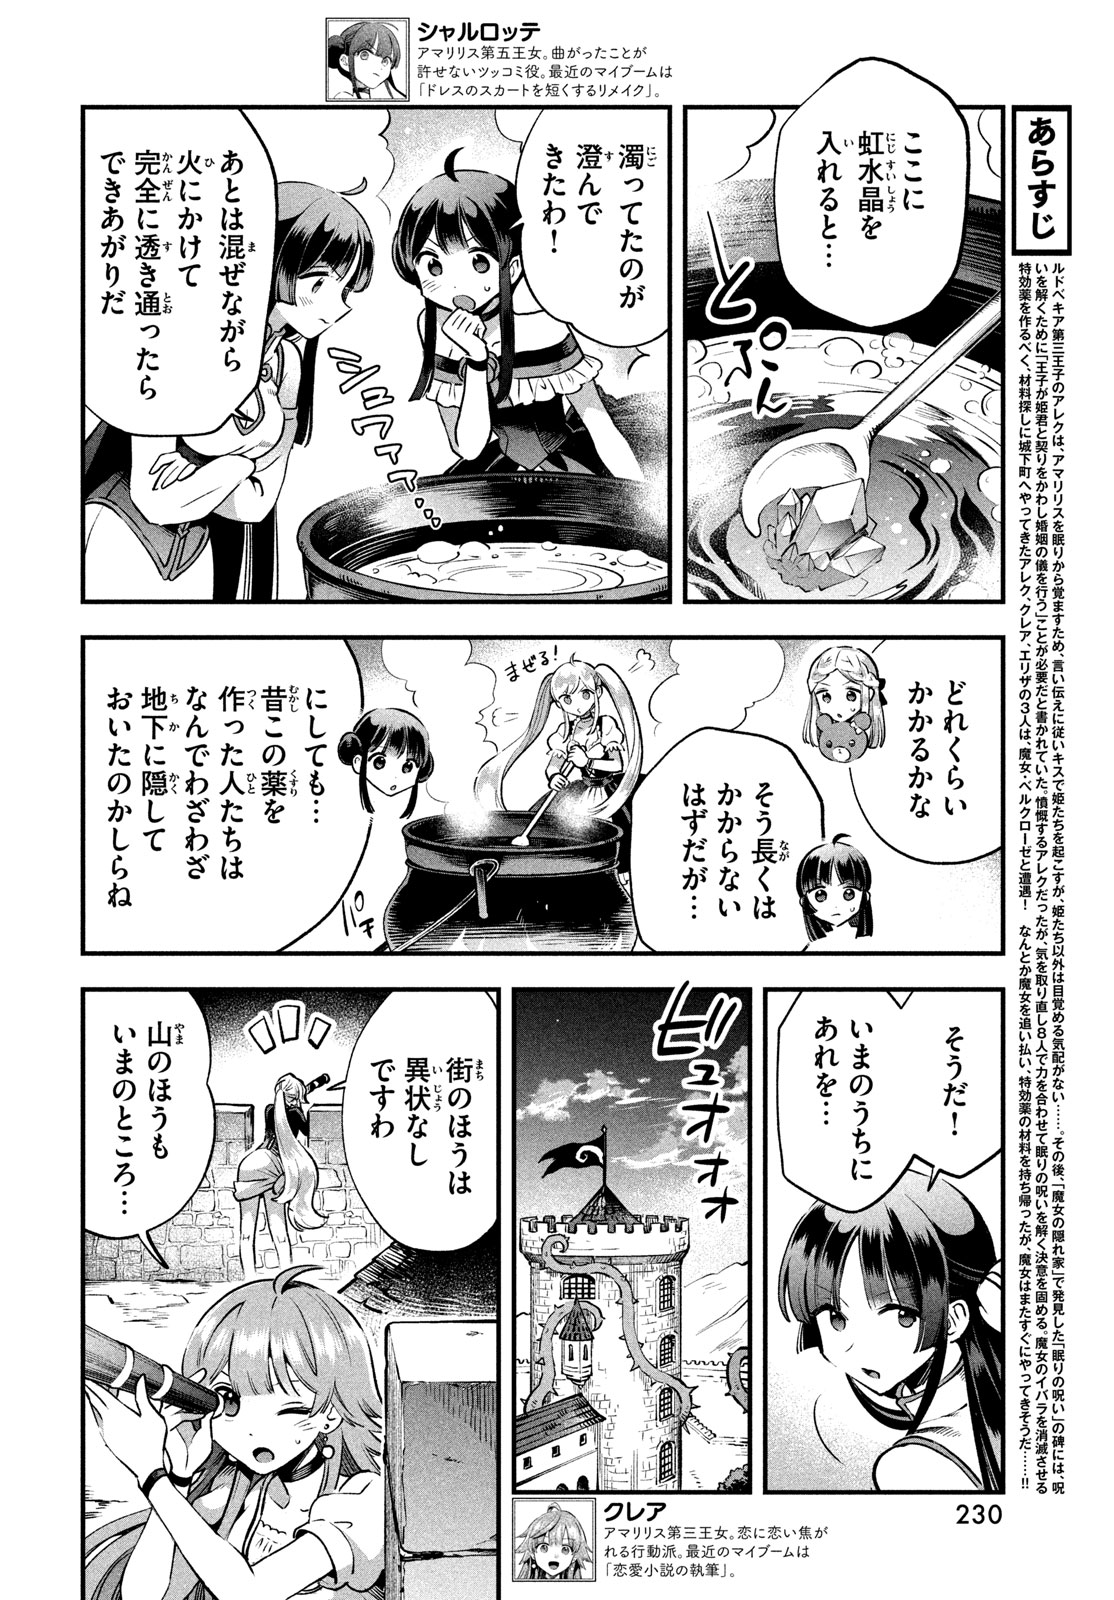 7-nin no Nemuri Hime - Chapter 46 - Page 4